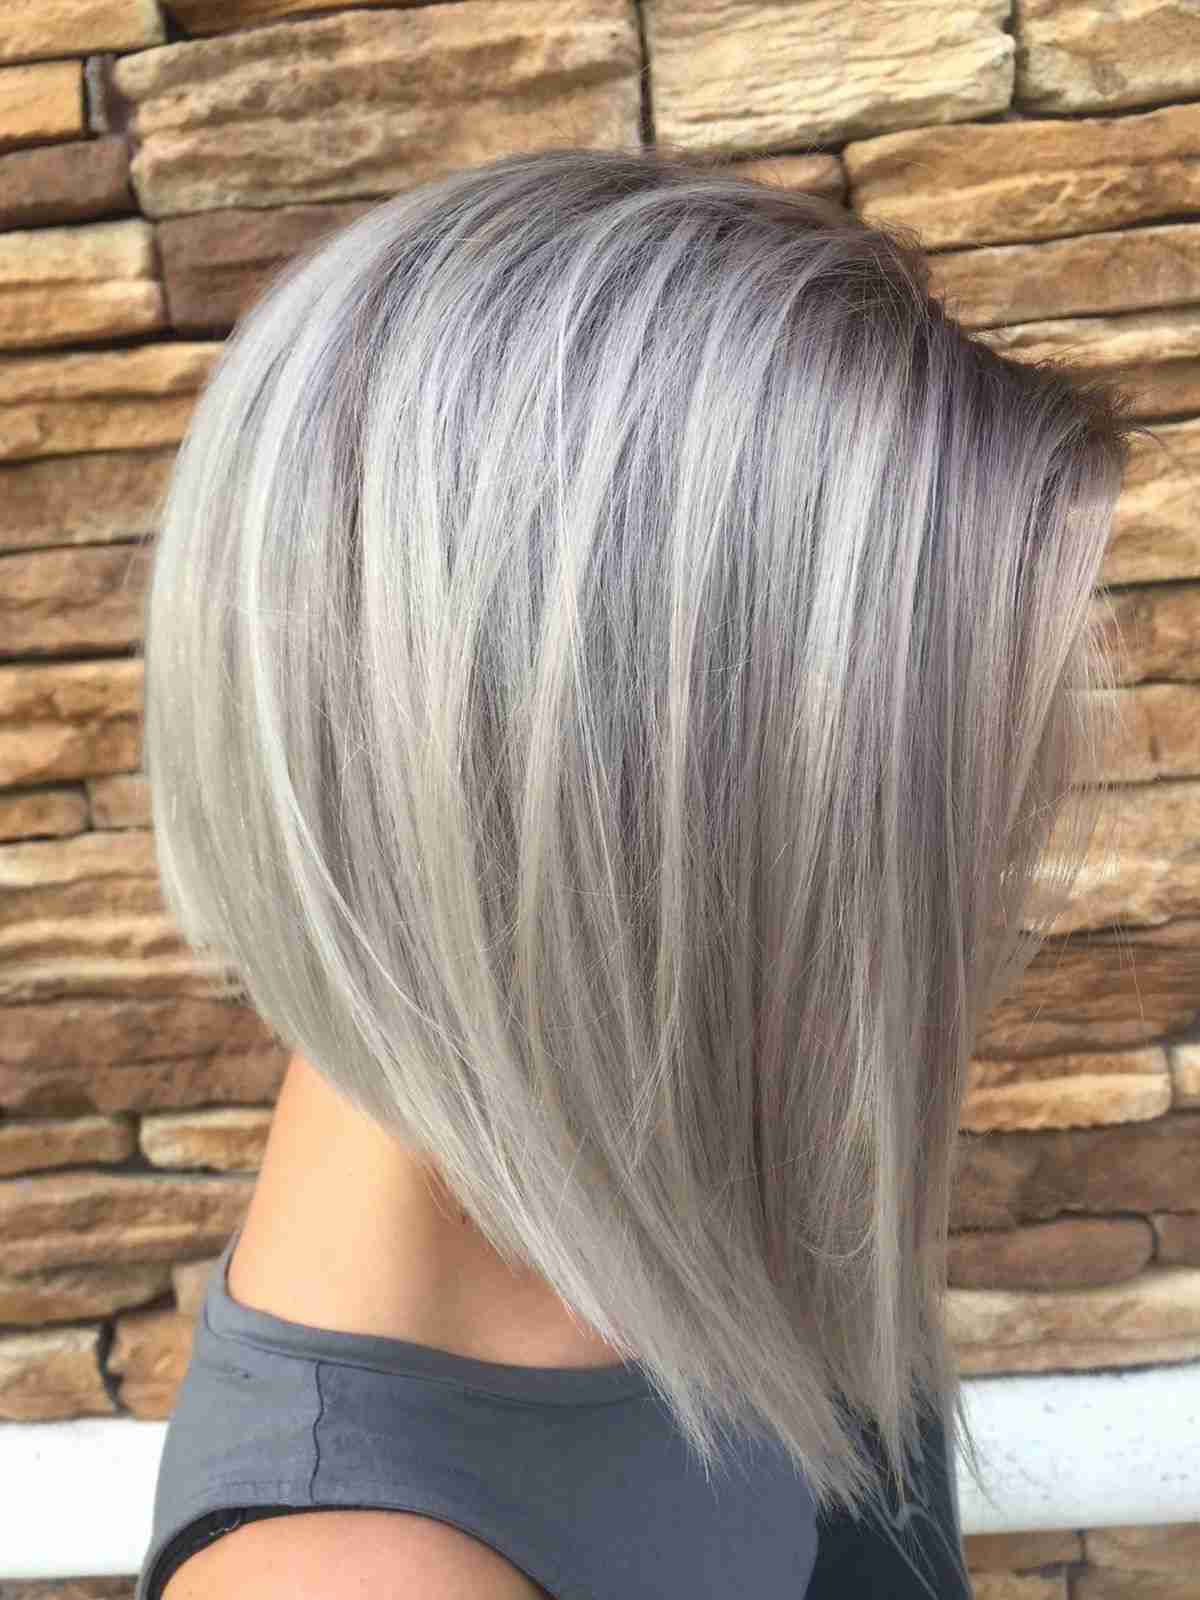 Silver hair gray hair color strands long bob hairstyle asymmetrical hairstyles ideas quick easy